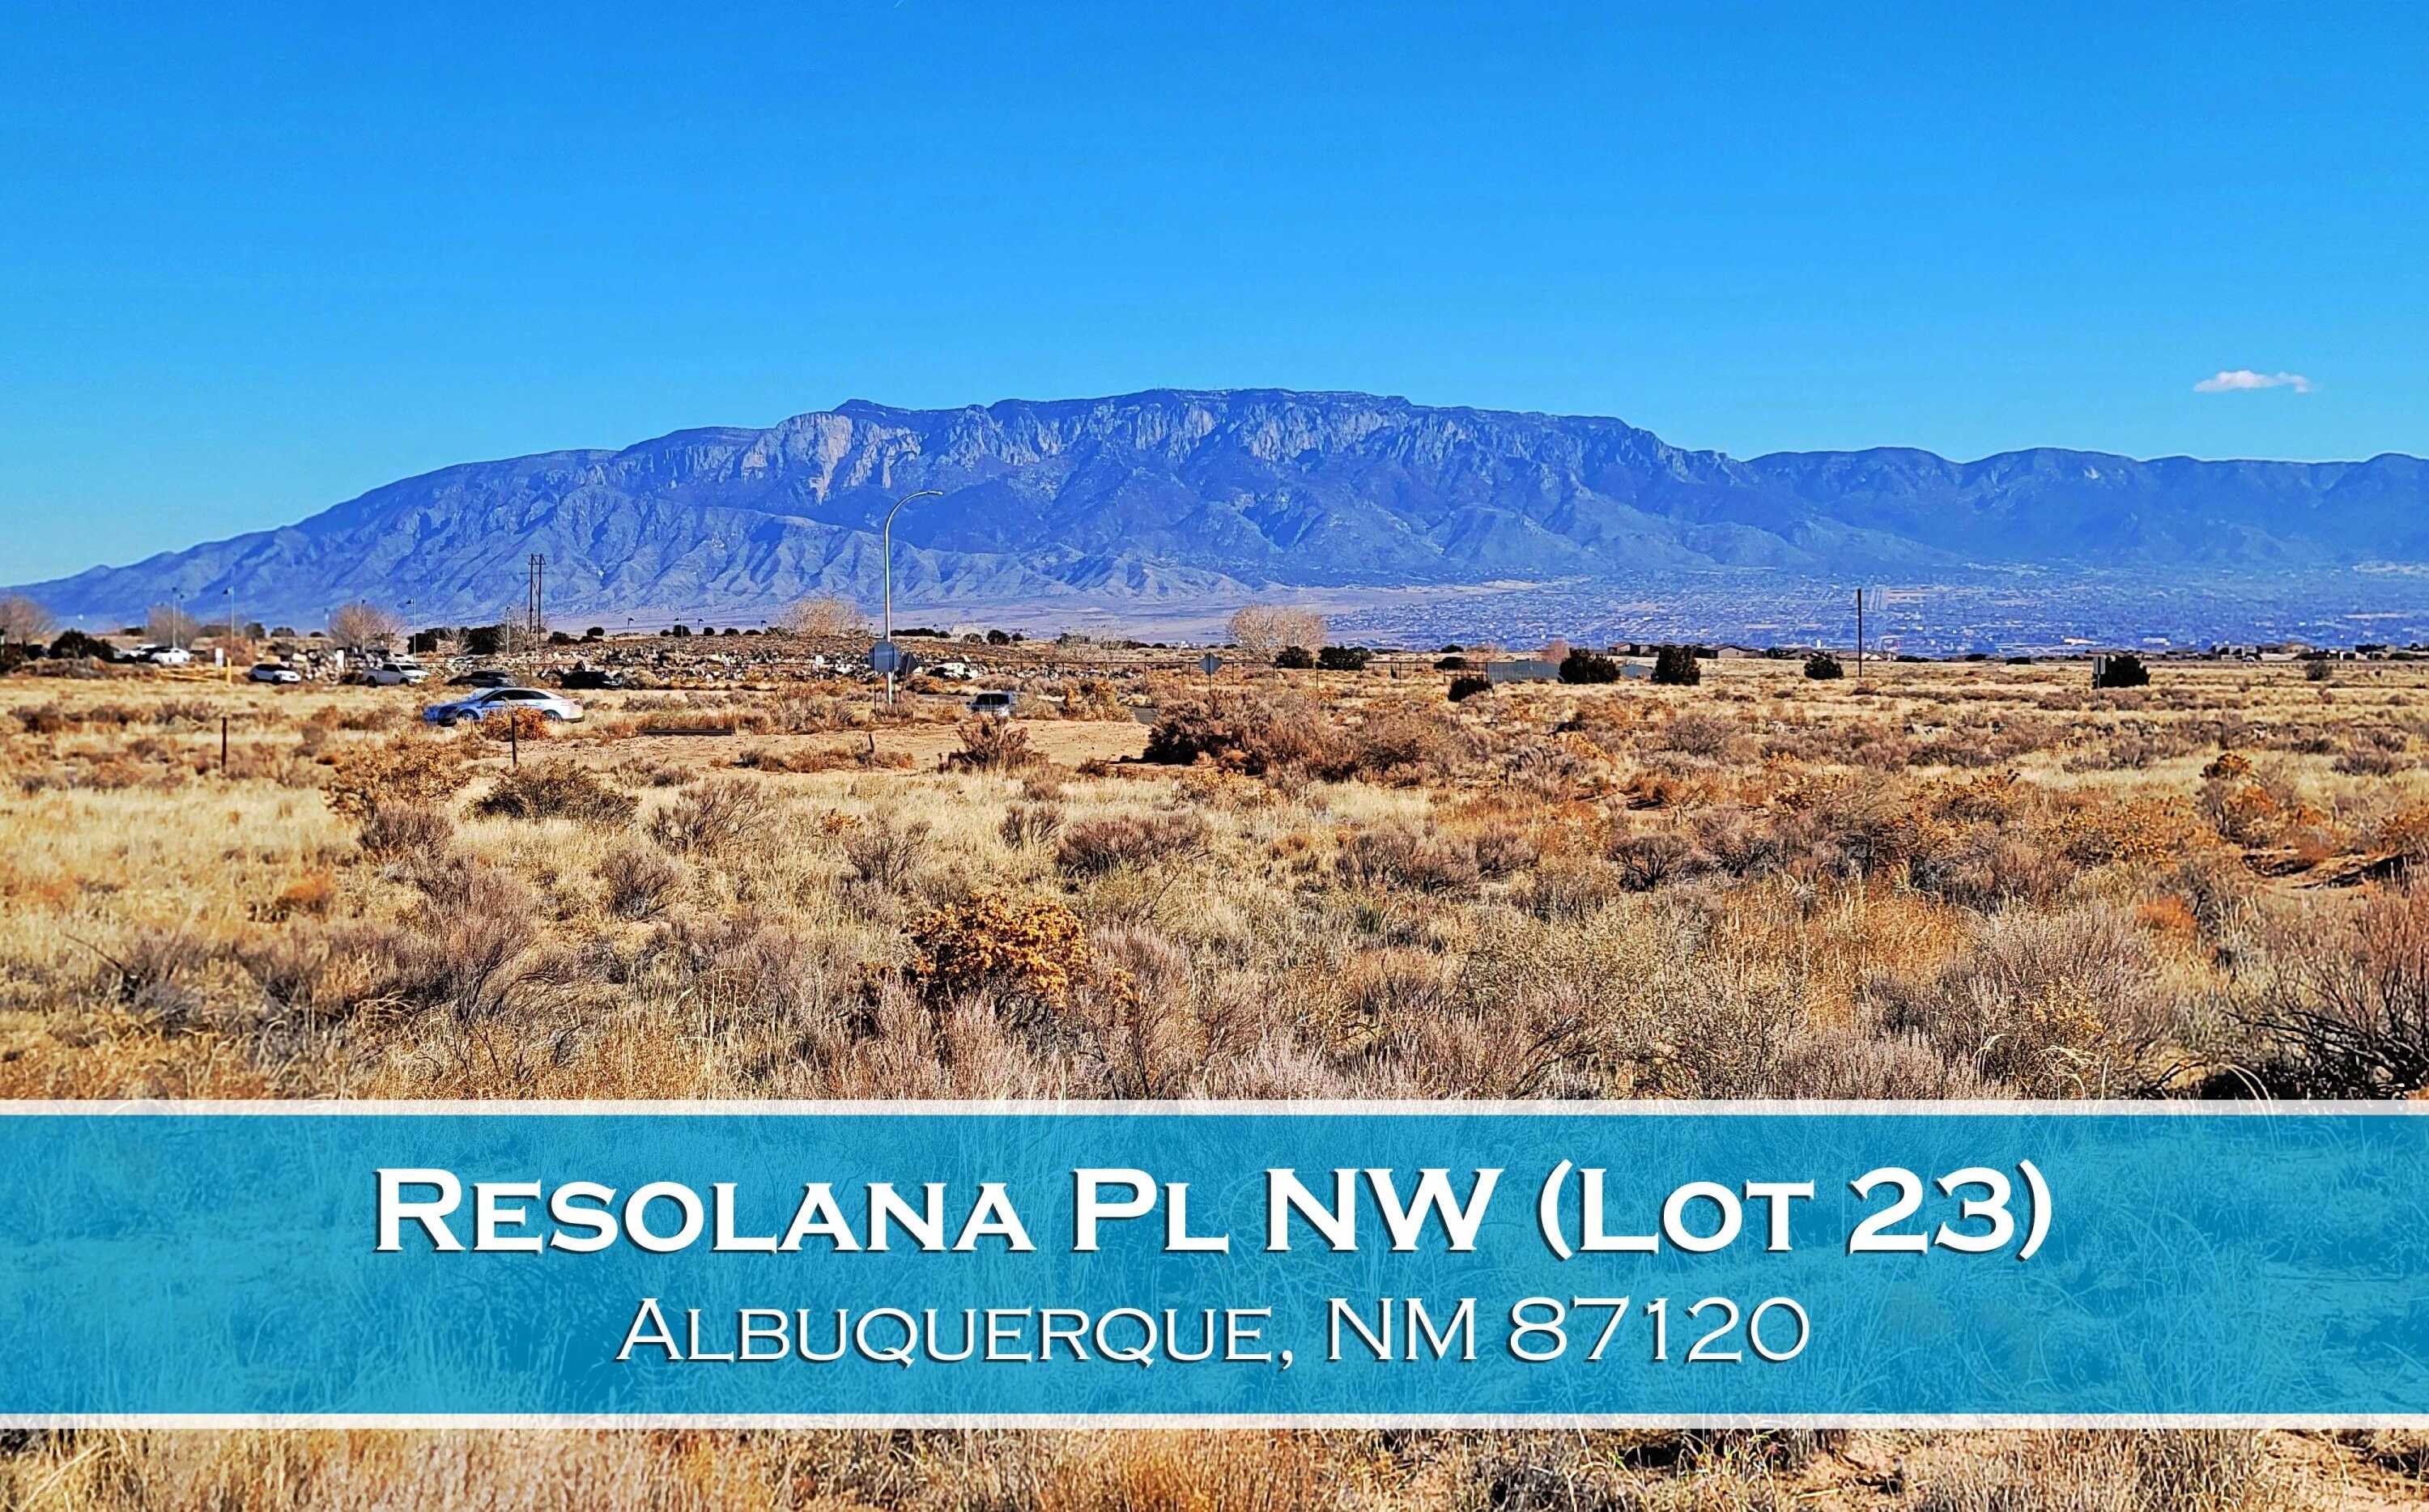 View Albuquerque, NM 87120 property